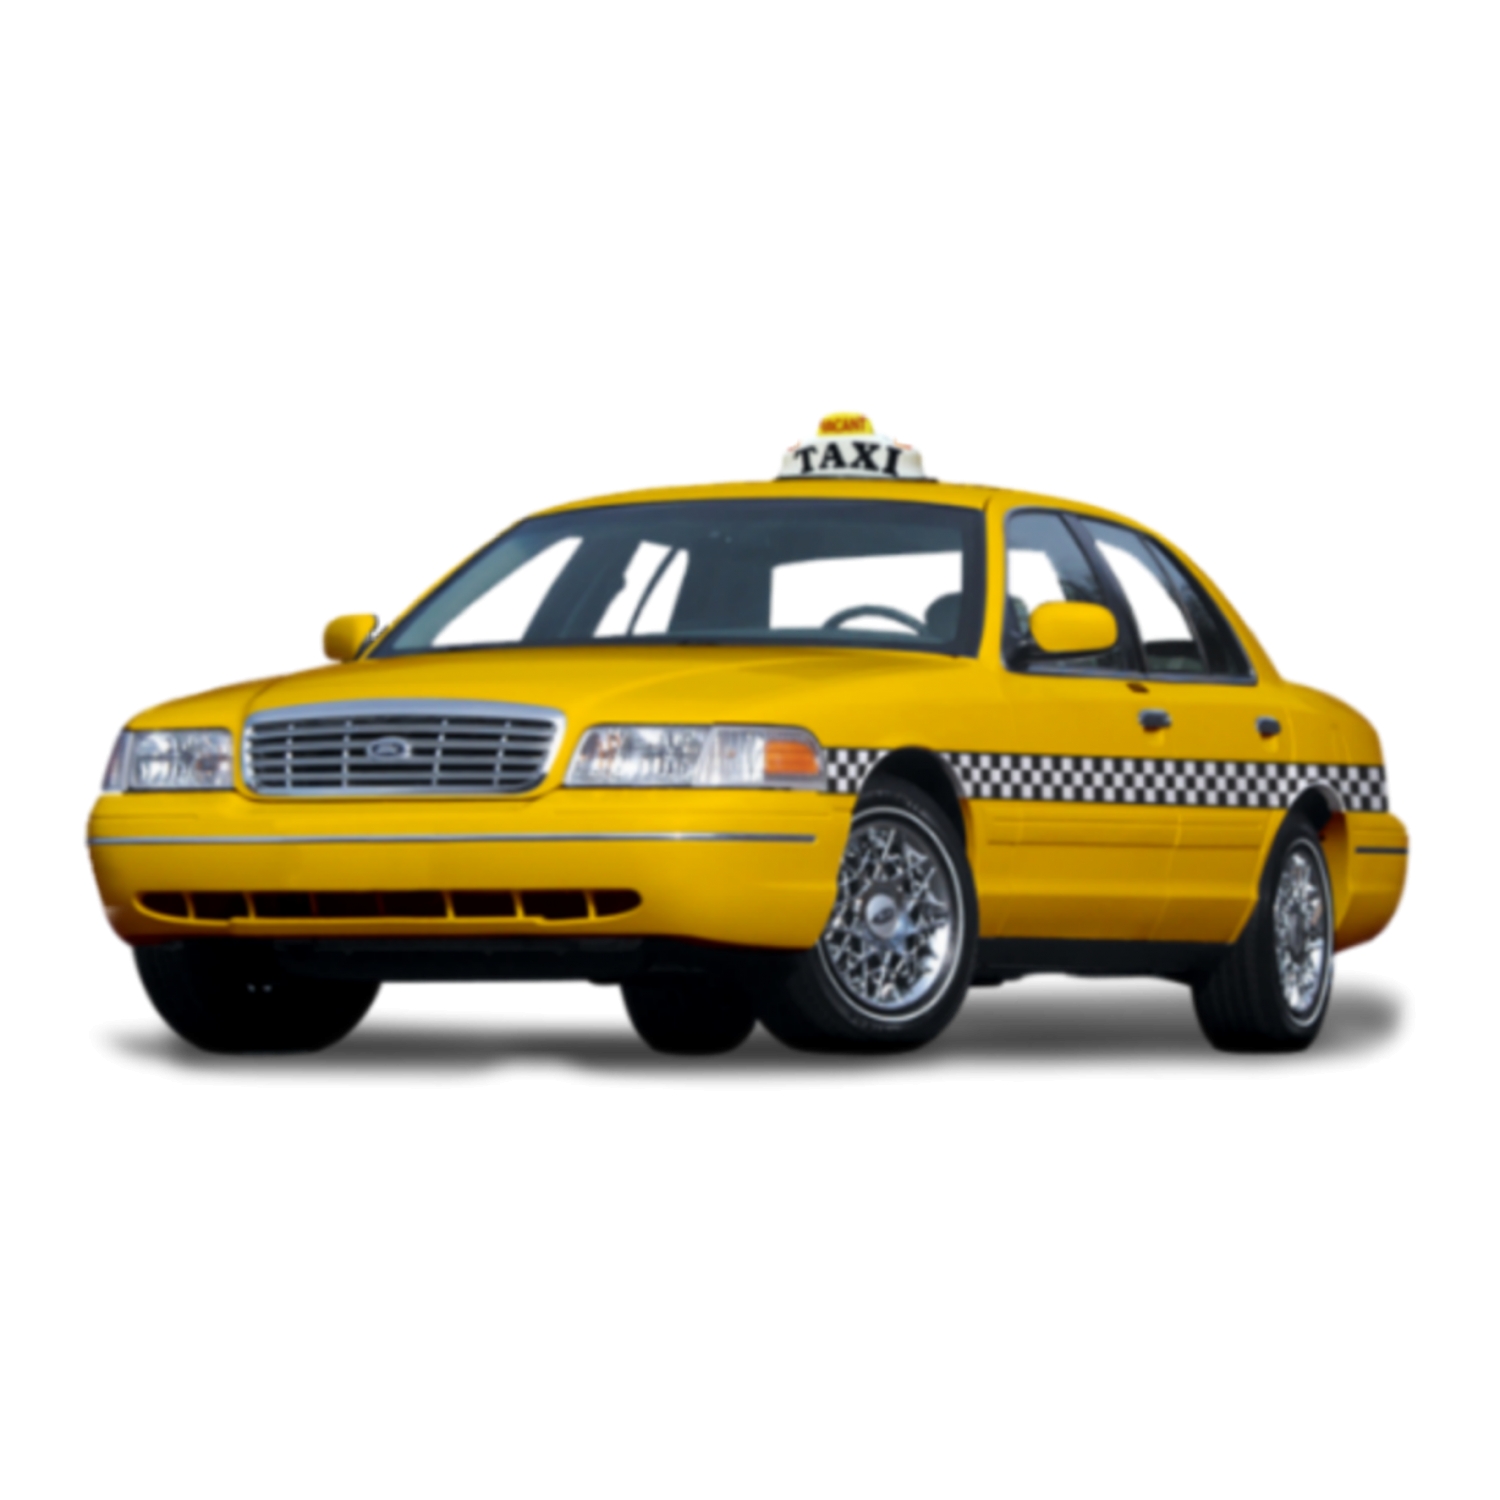 Art mos taxi login. Машина "такси". Автомобиль «такси». Легковой автомобиль такси. Таха машина.